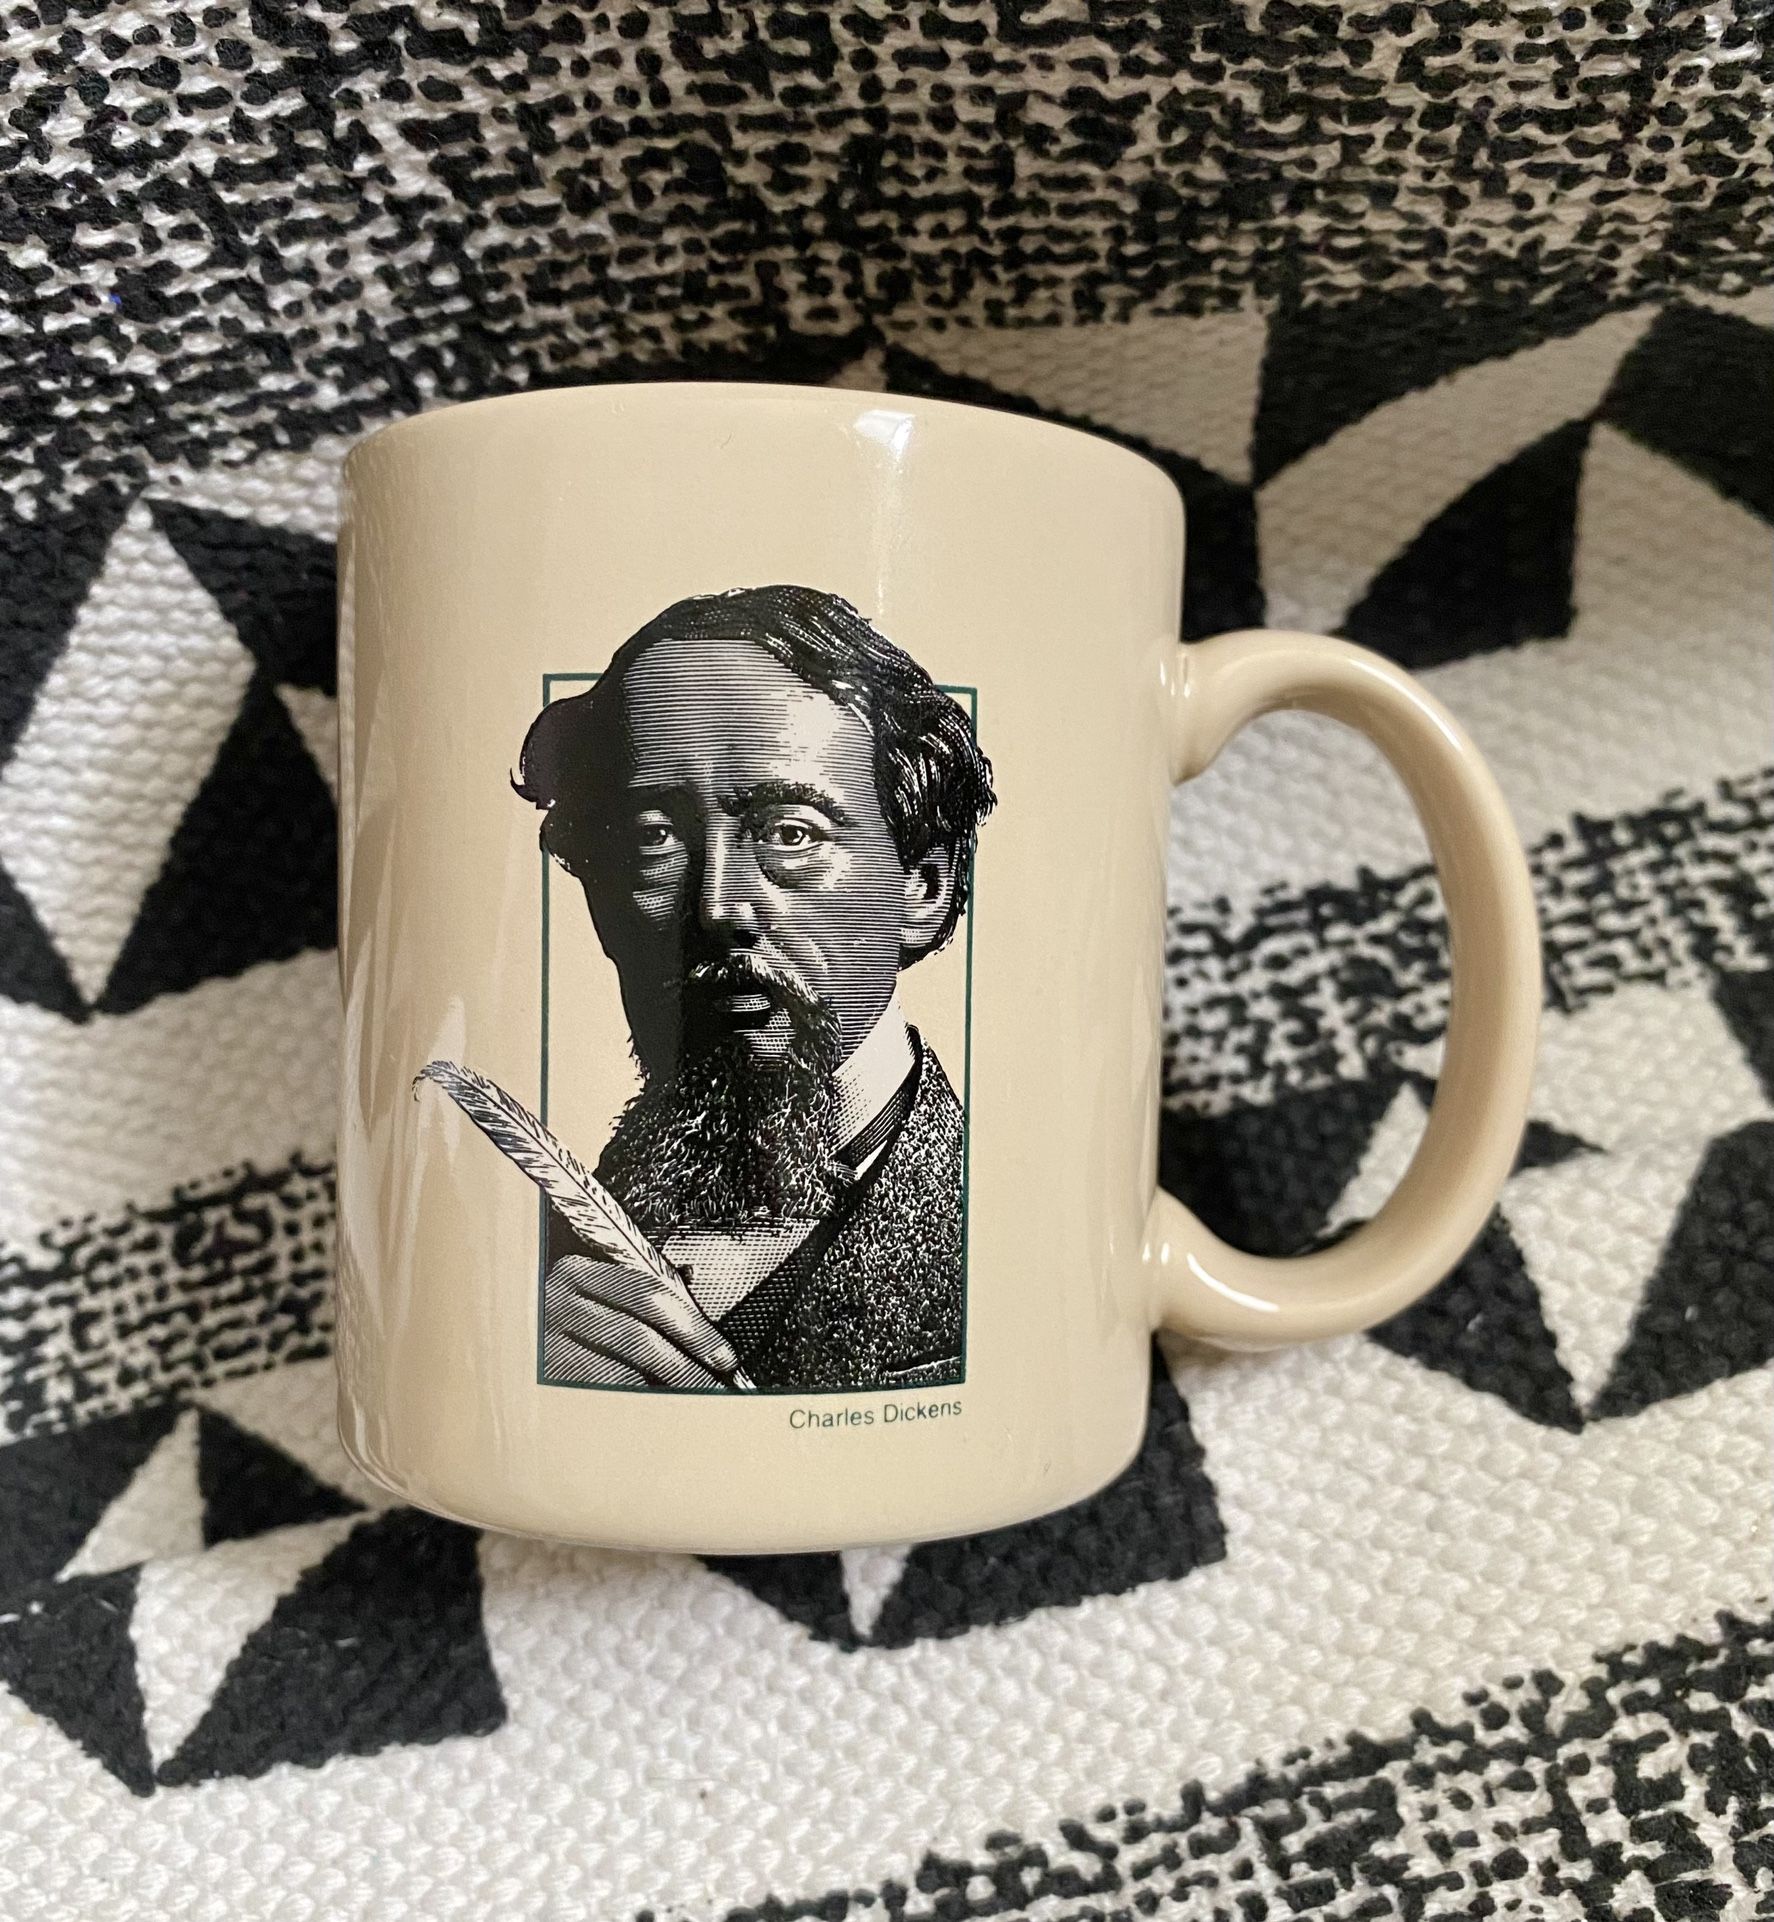 Vintage Barnes & Noble Coffee Mug Charles Dickens Author Pop Art Ceramic Cup